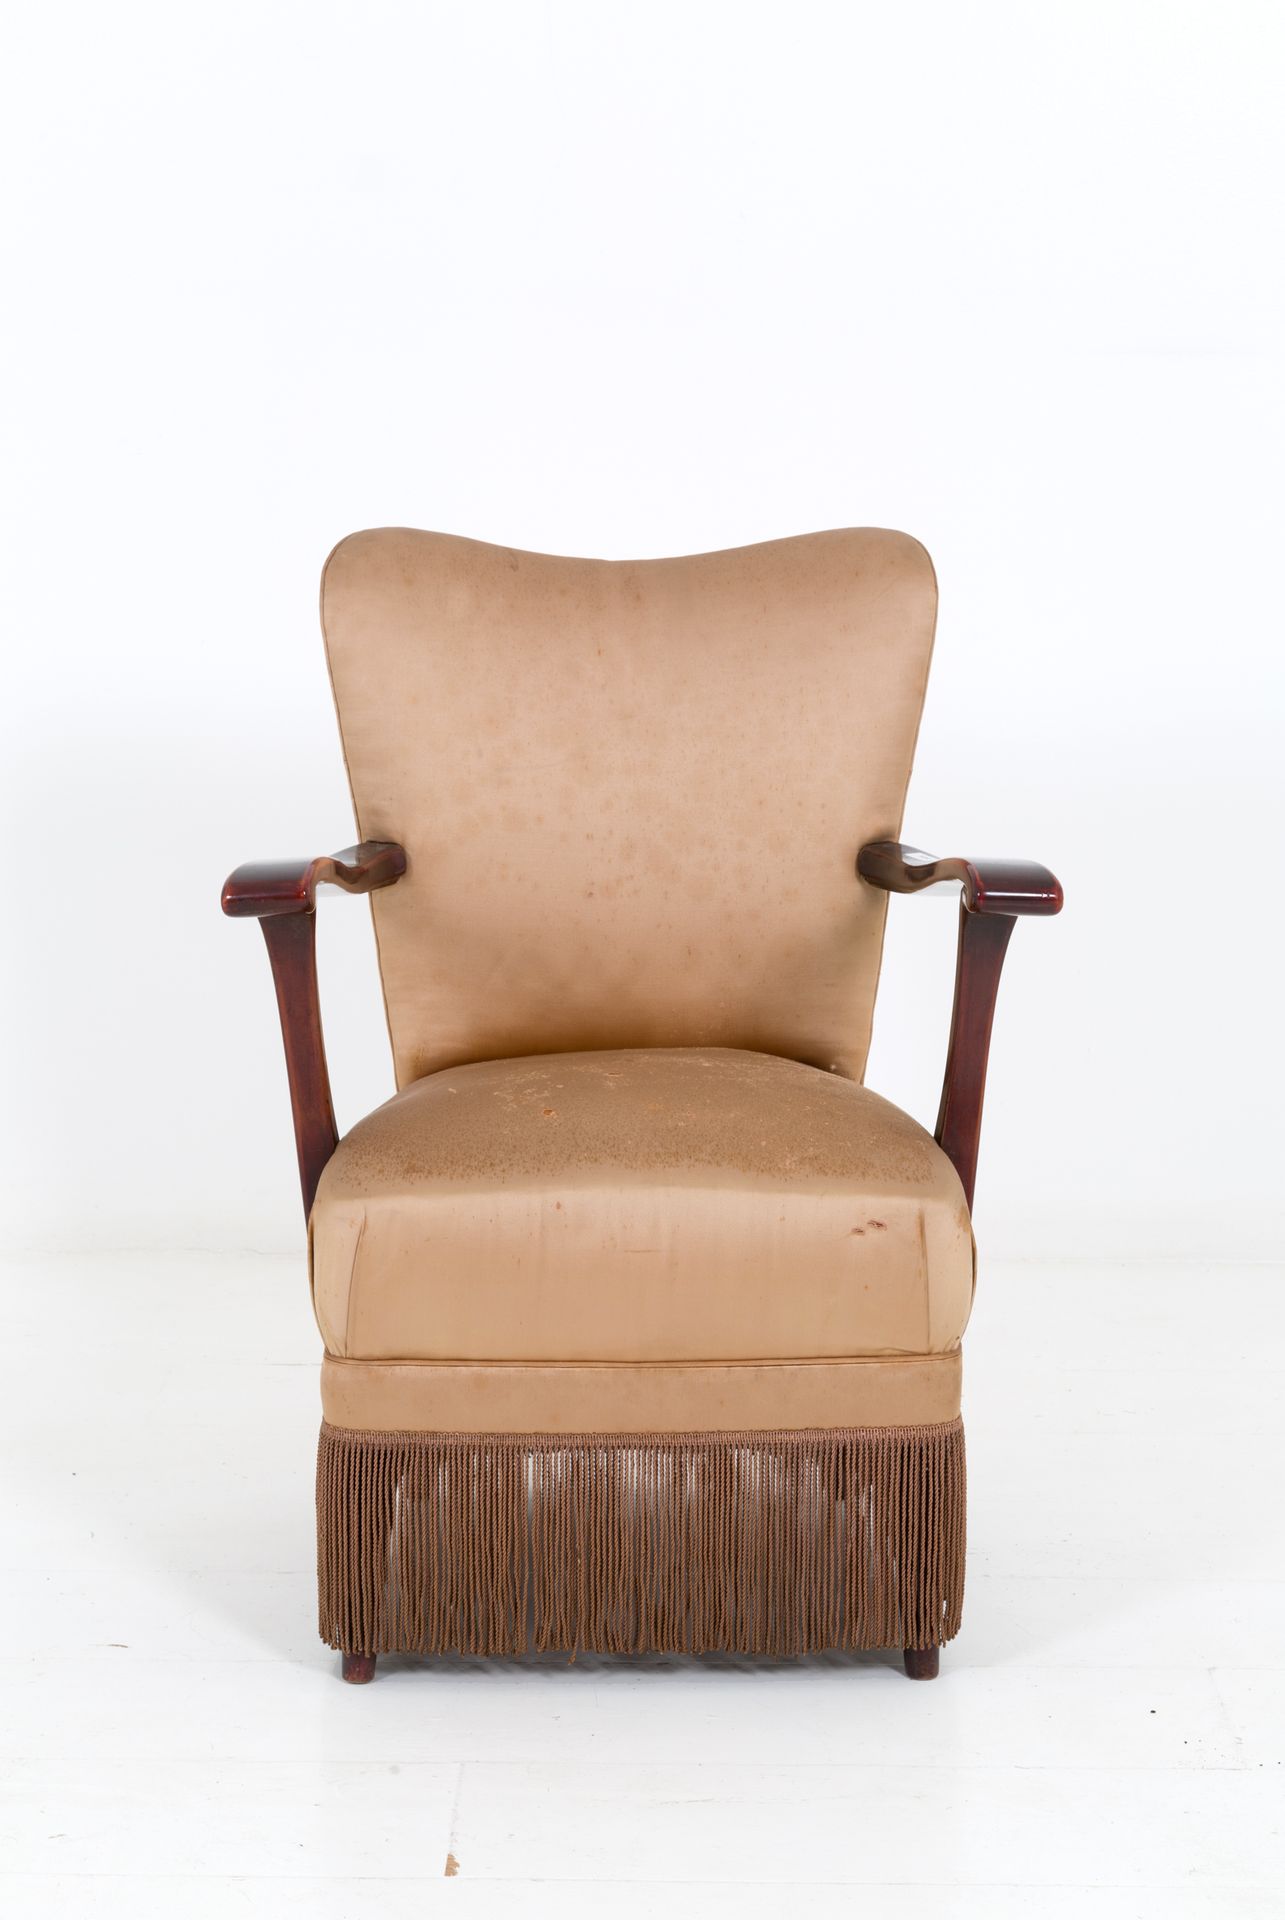 OSVALDO BORSANI for ABV. Armchair with wooden armrests OSVALDO BORSANI（瓦雷多，1911年&hellip;